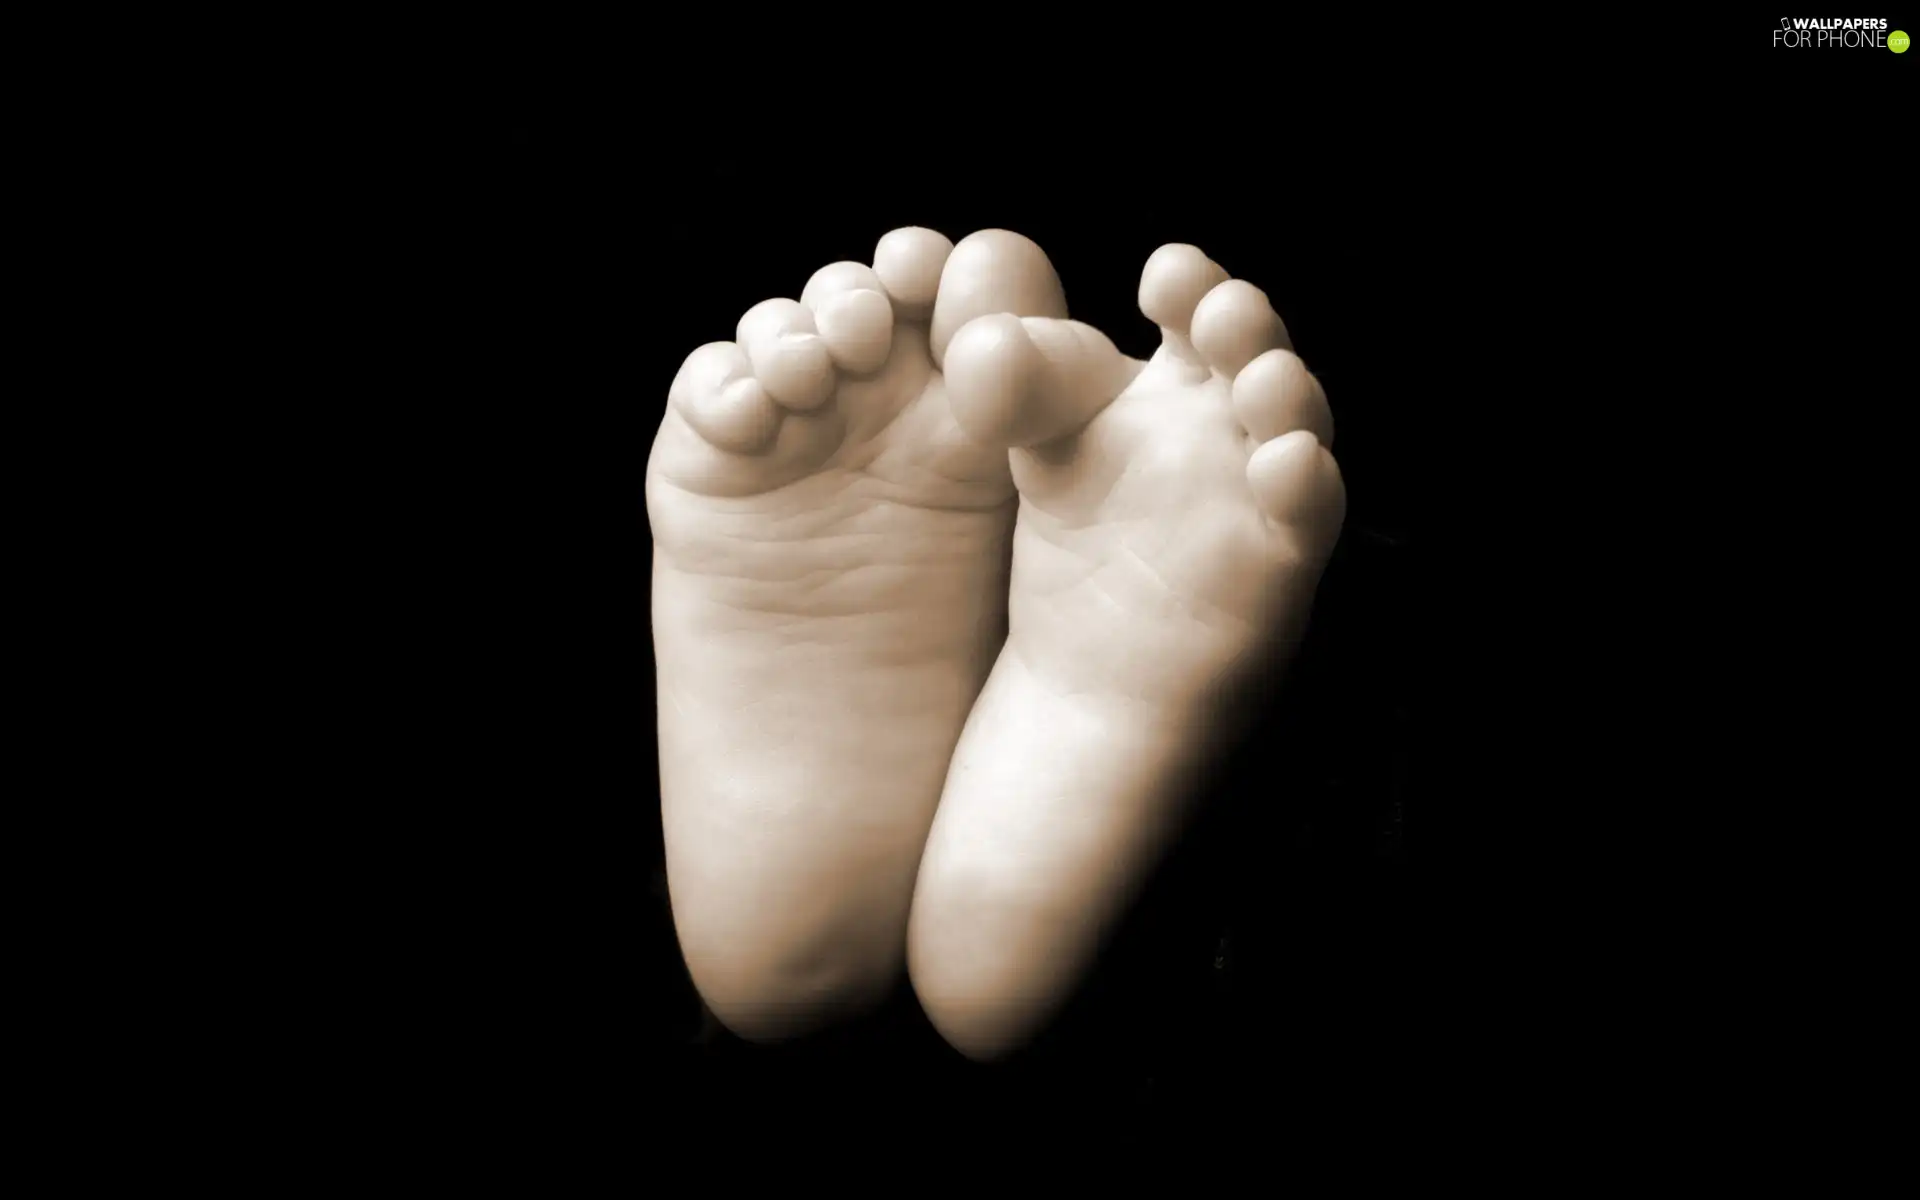 Feet, child-